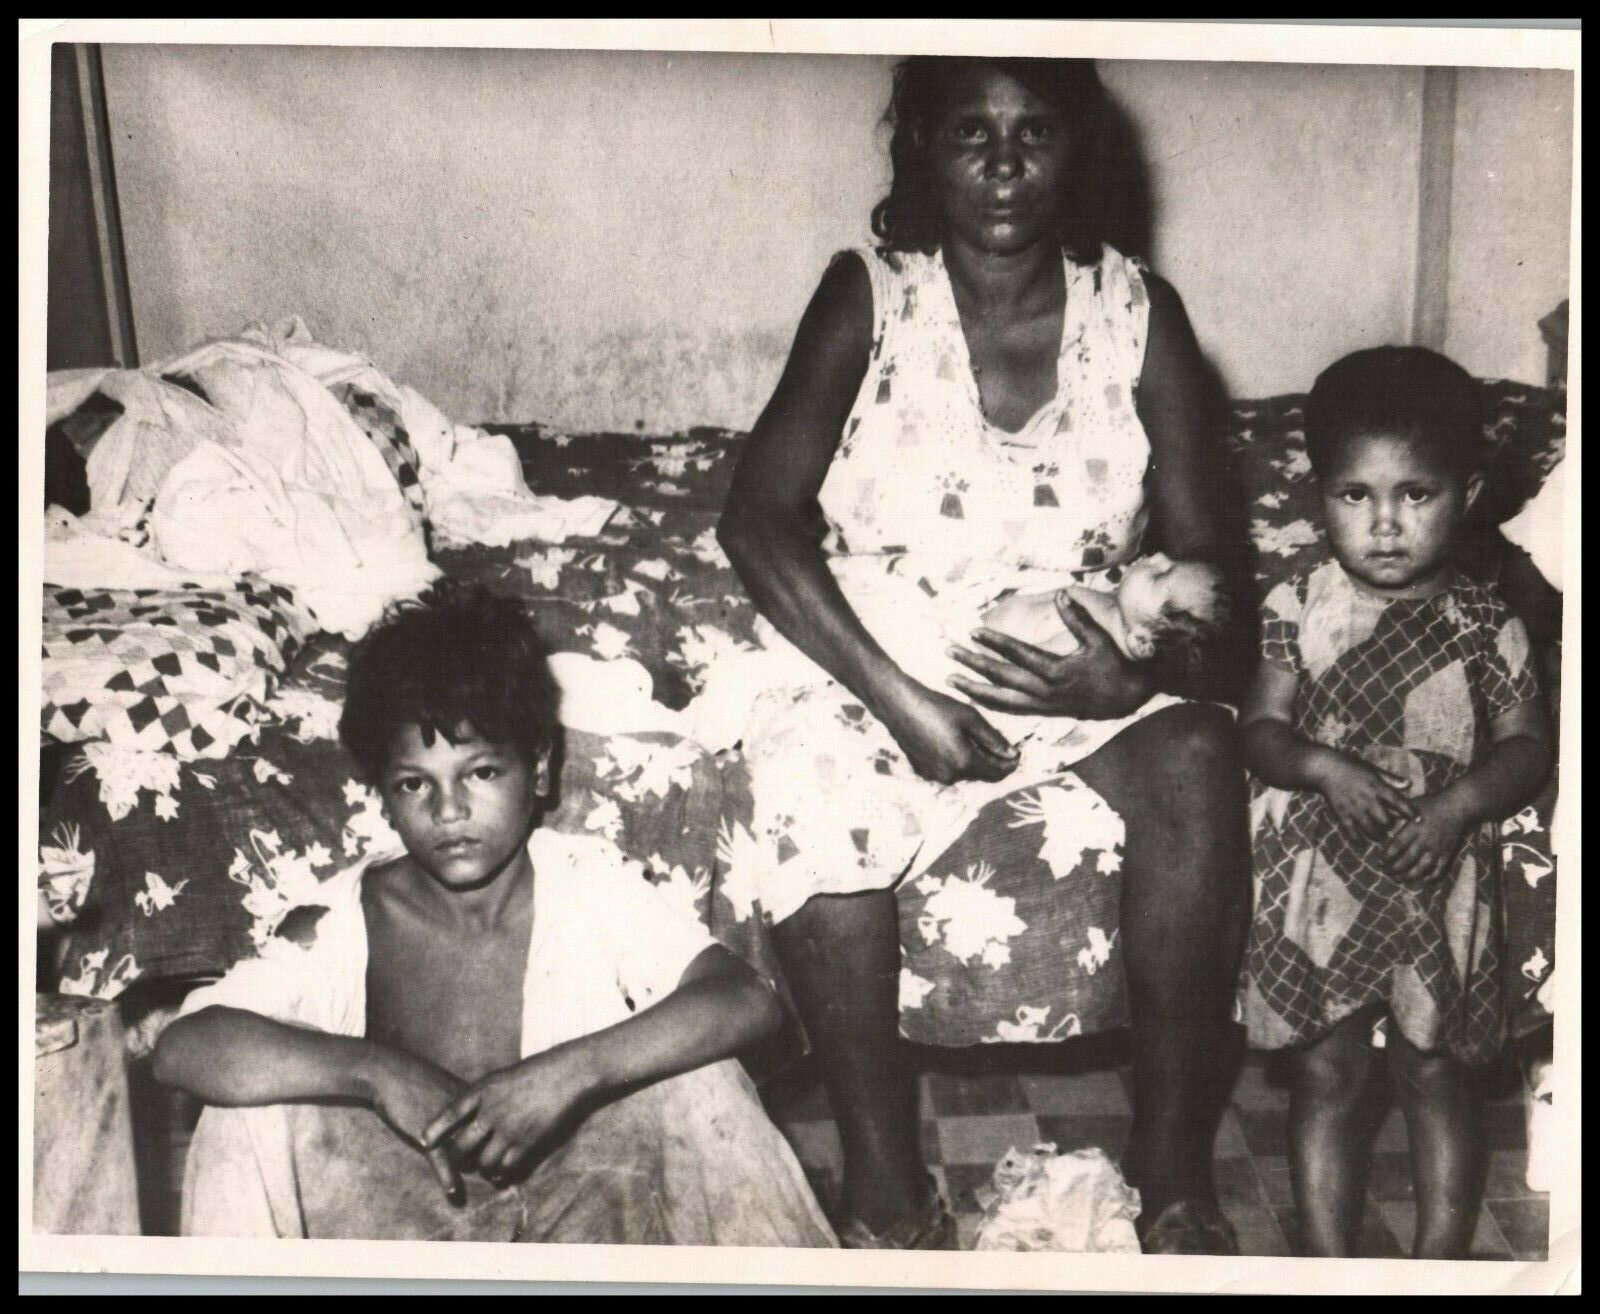 SOCIAL EXCLUSION PEASANT MOTHER & CHILDREN CUBAN BEGGARS CUBA 1950s Photo Y 171